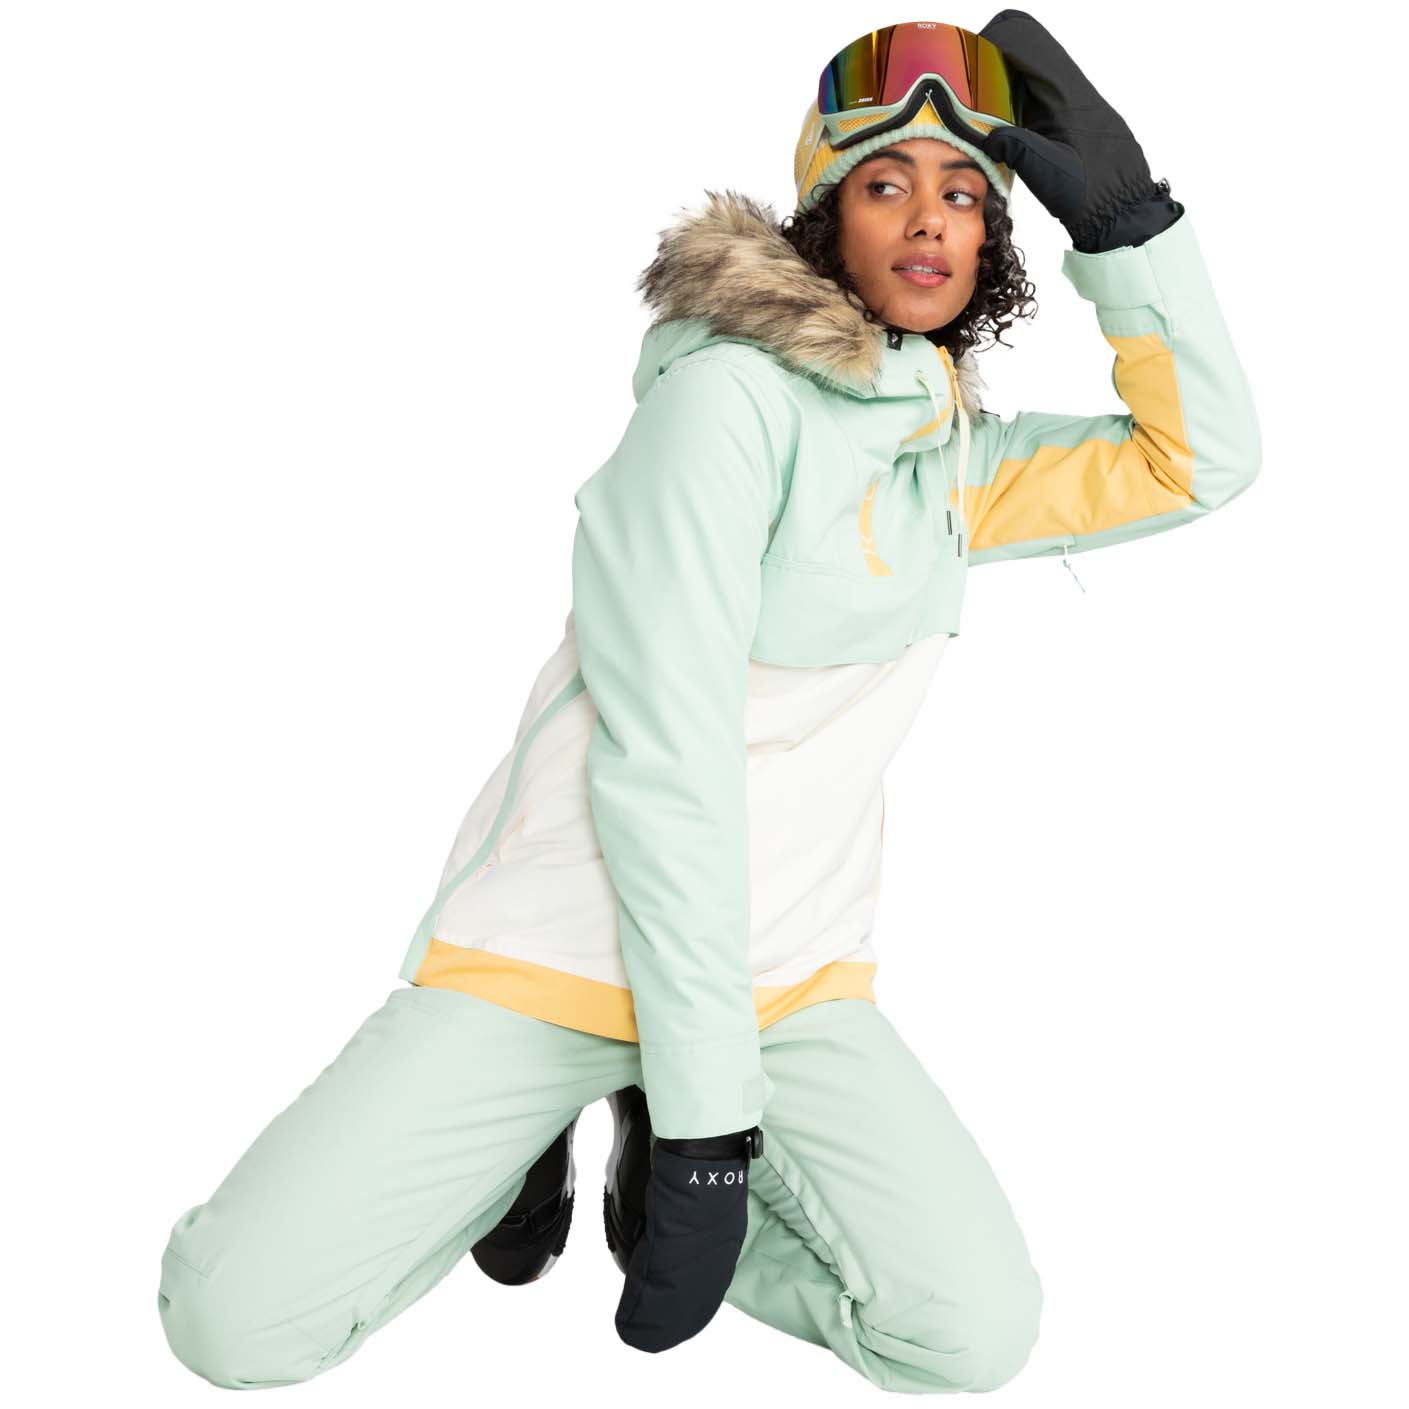 Roxy Shelter Women's Snowboard/Ski Jacket